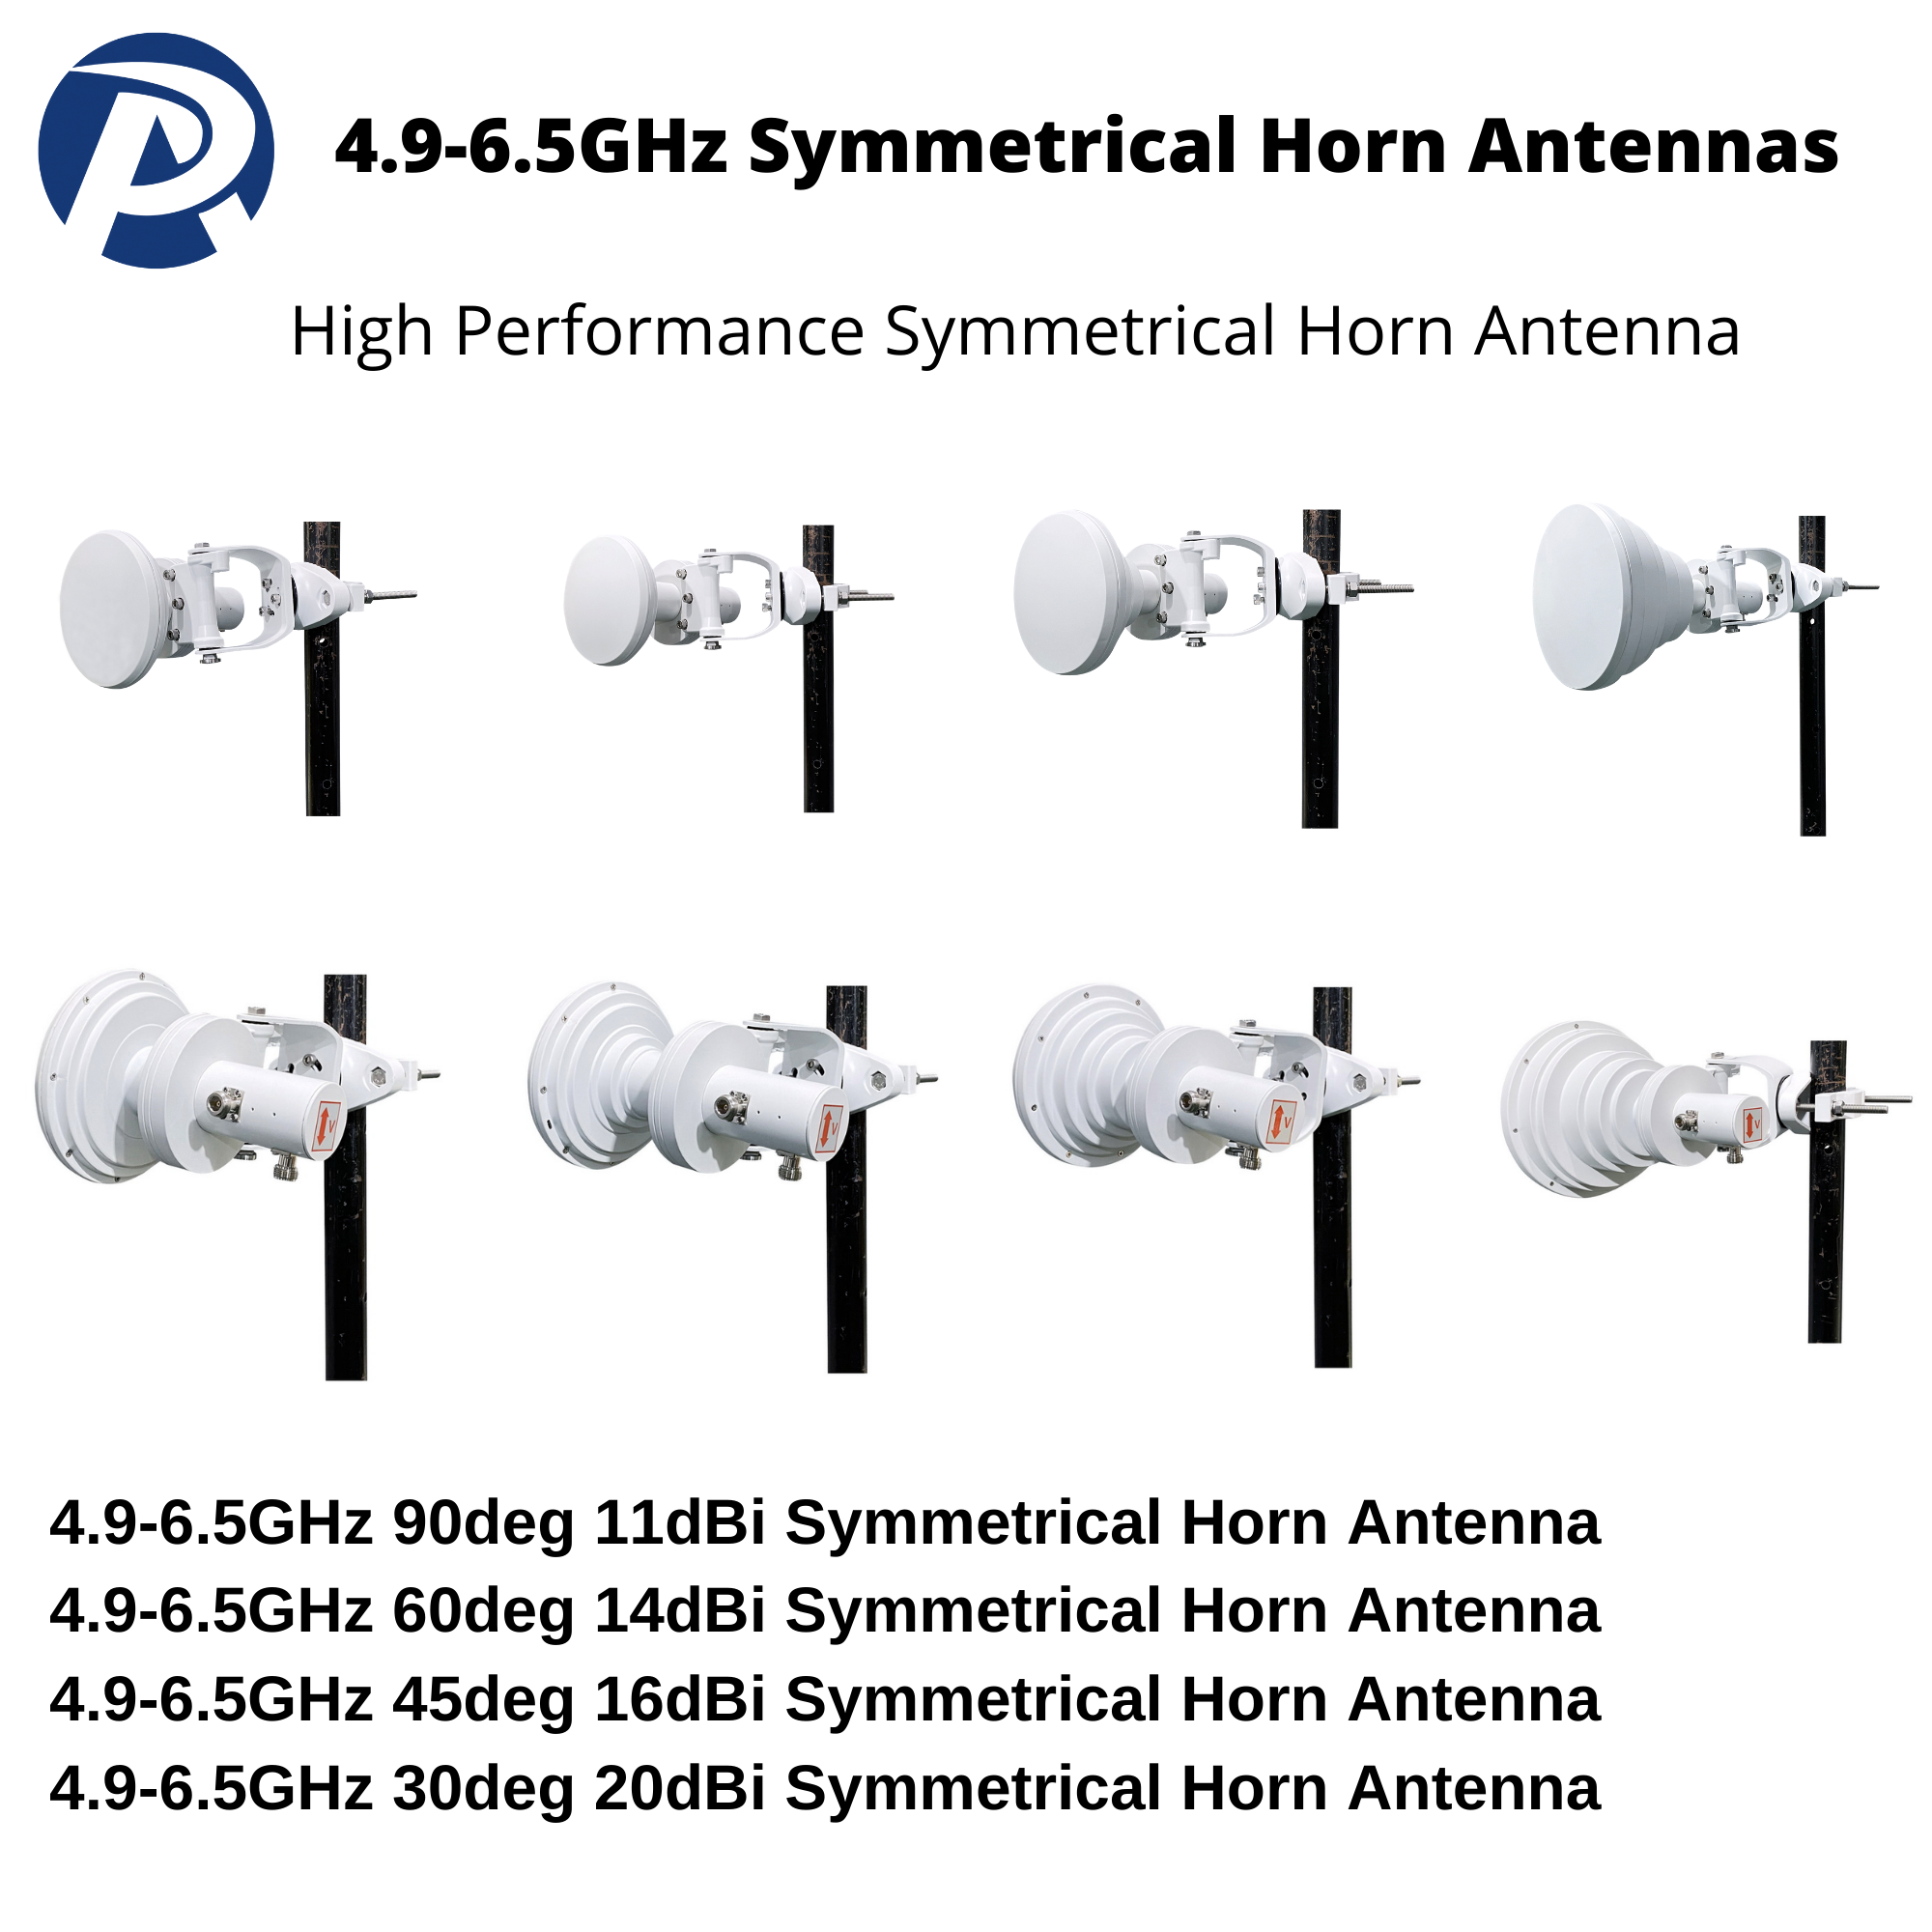 4.9-6.5GHz Symmetrical Horn Antennas